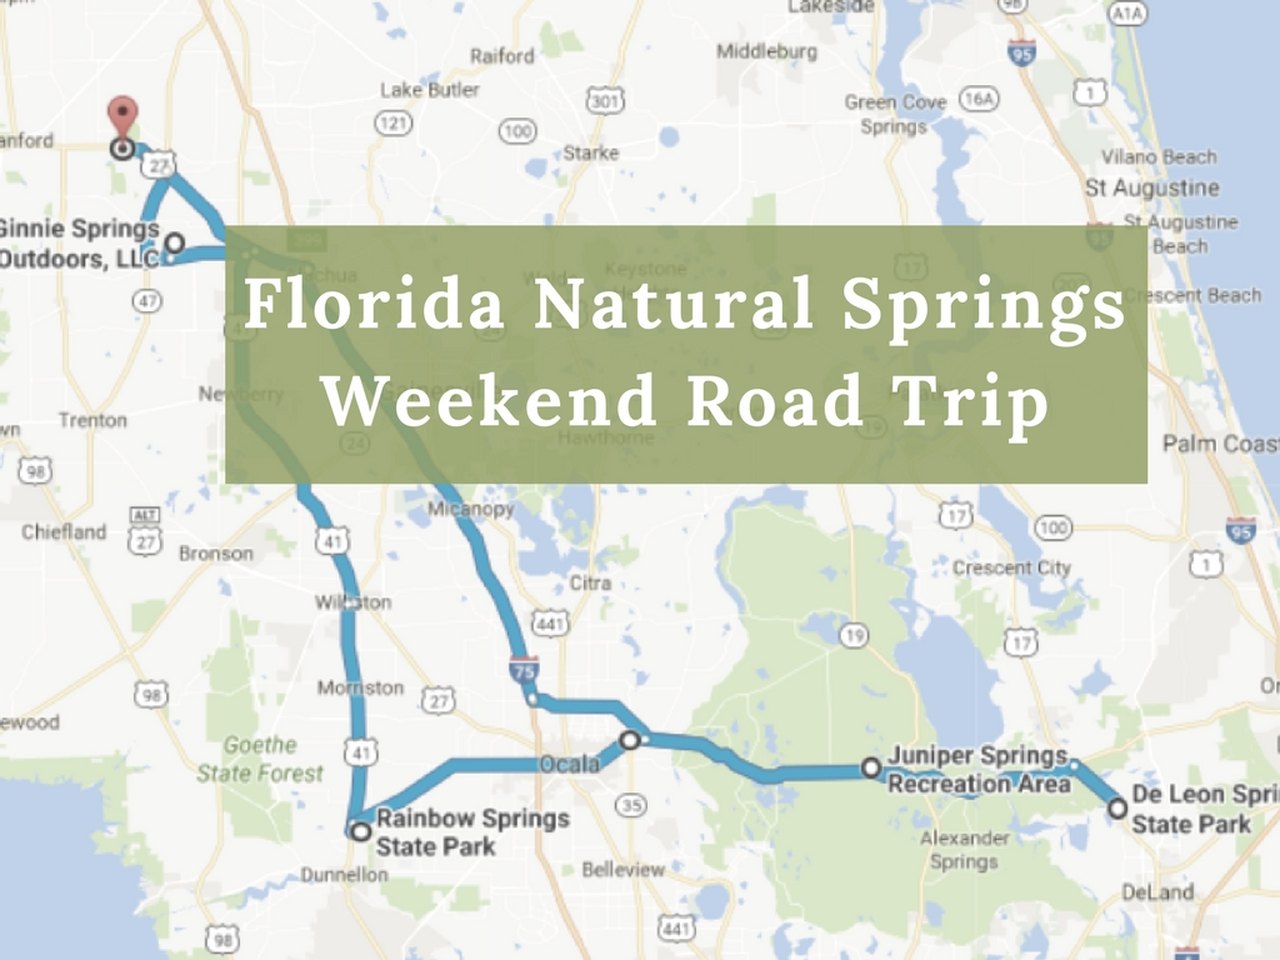 Explore Florida's Natural Springs